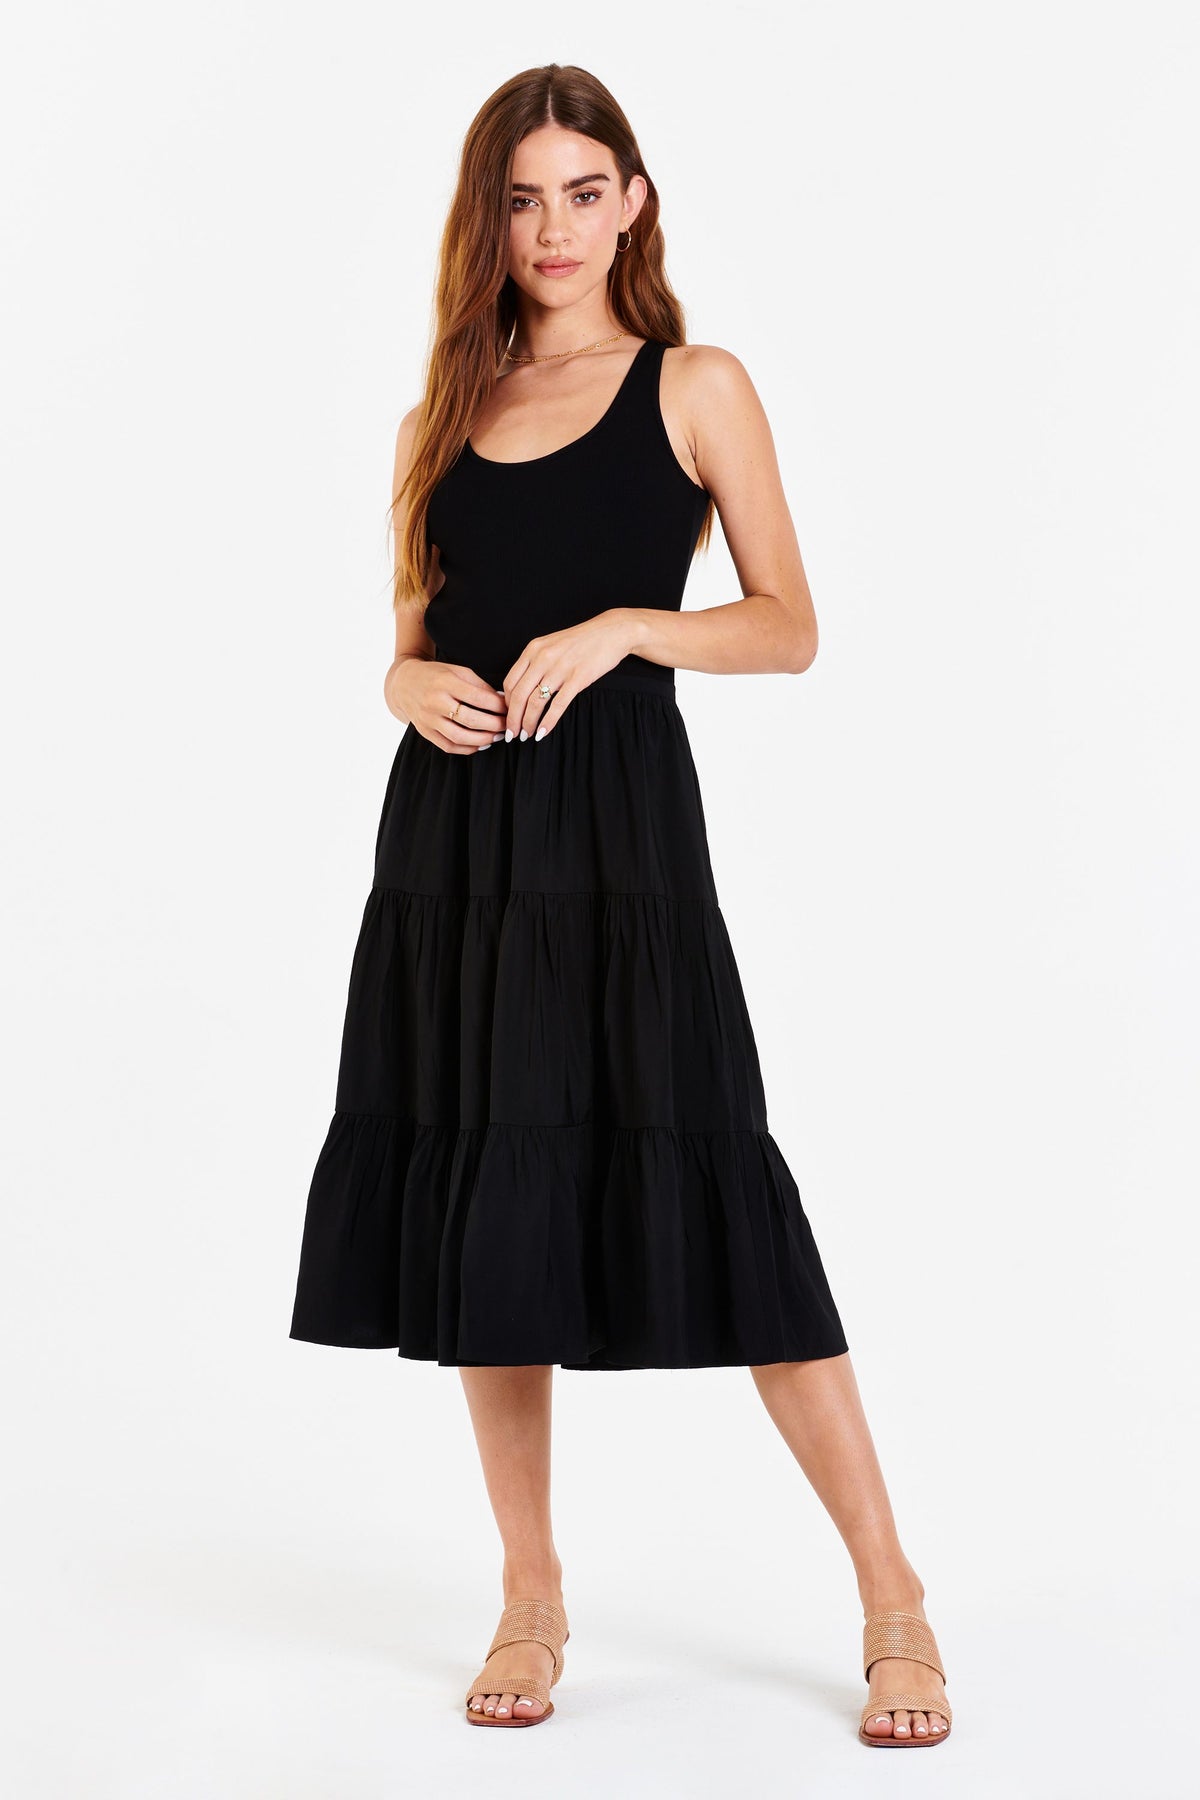 Another Love Portia Black Dress Dress - The Attic Boutique